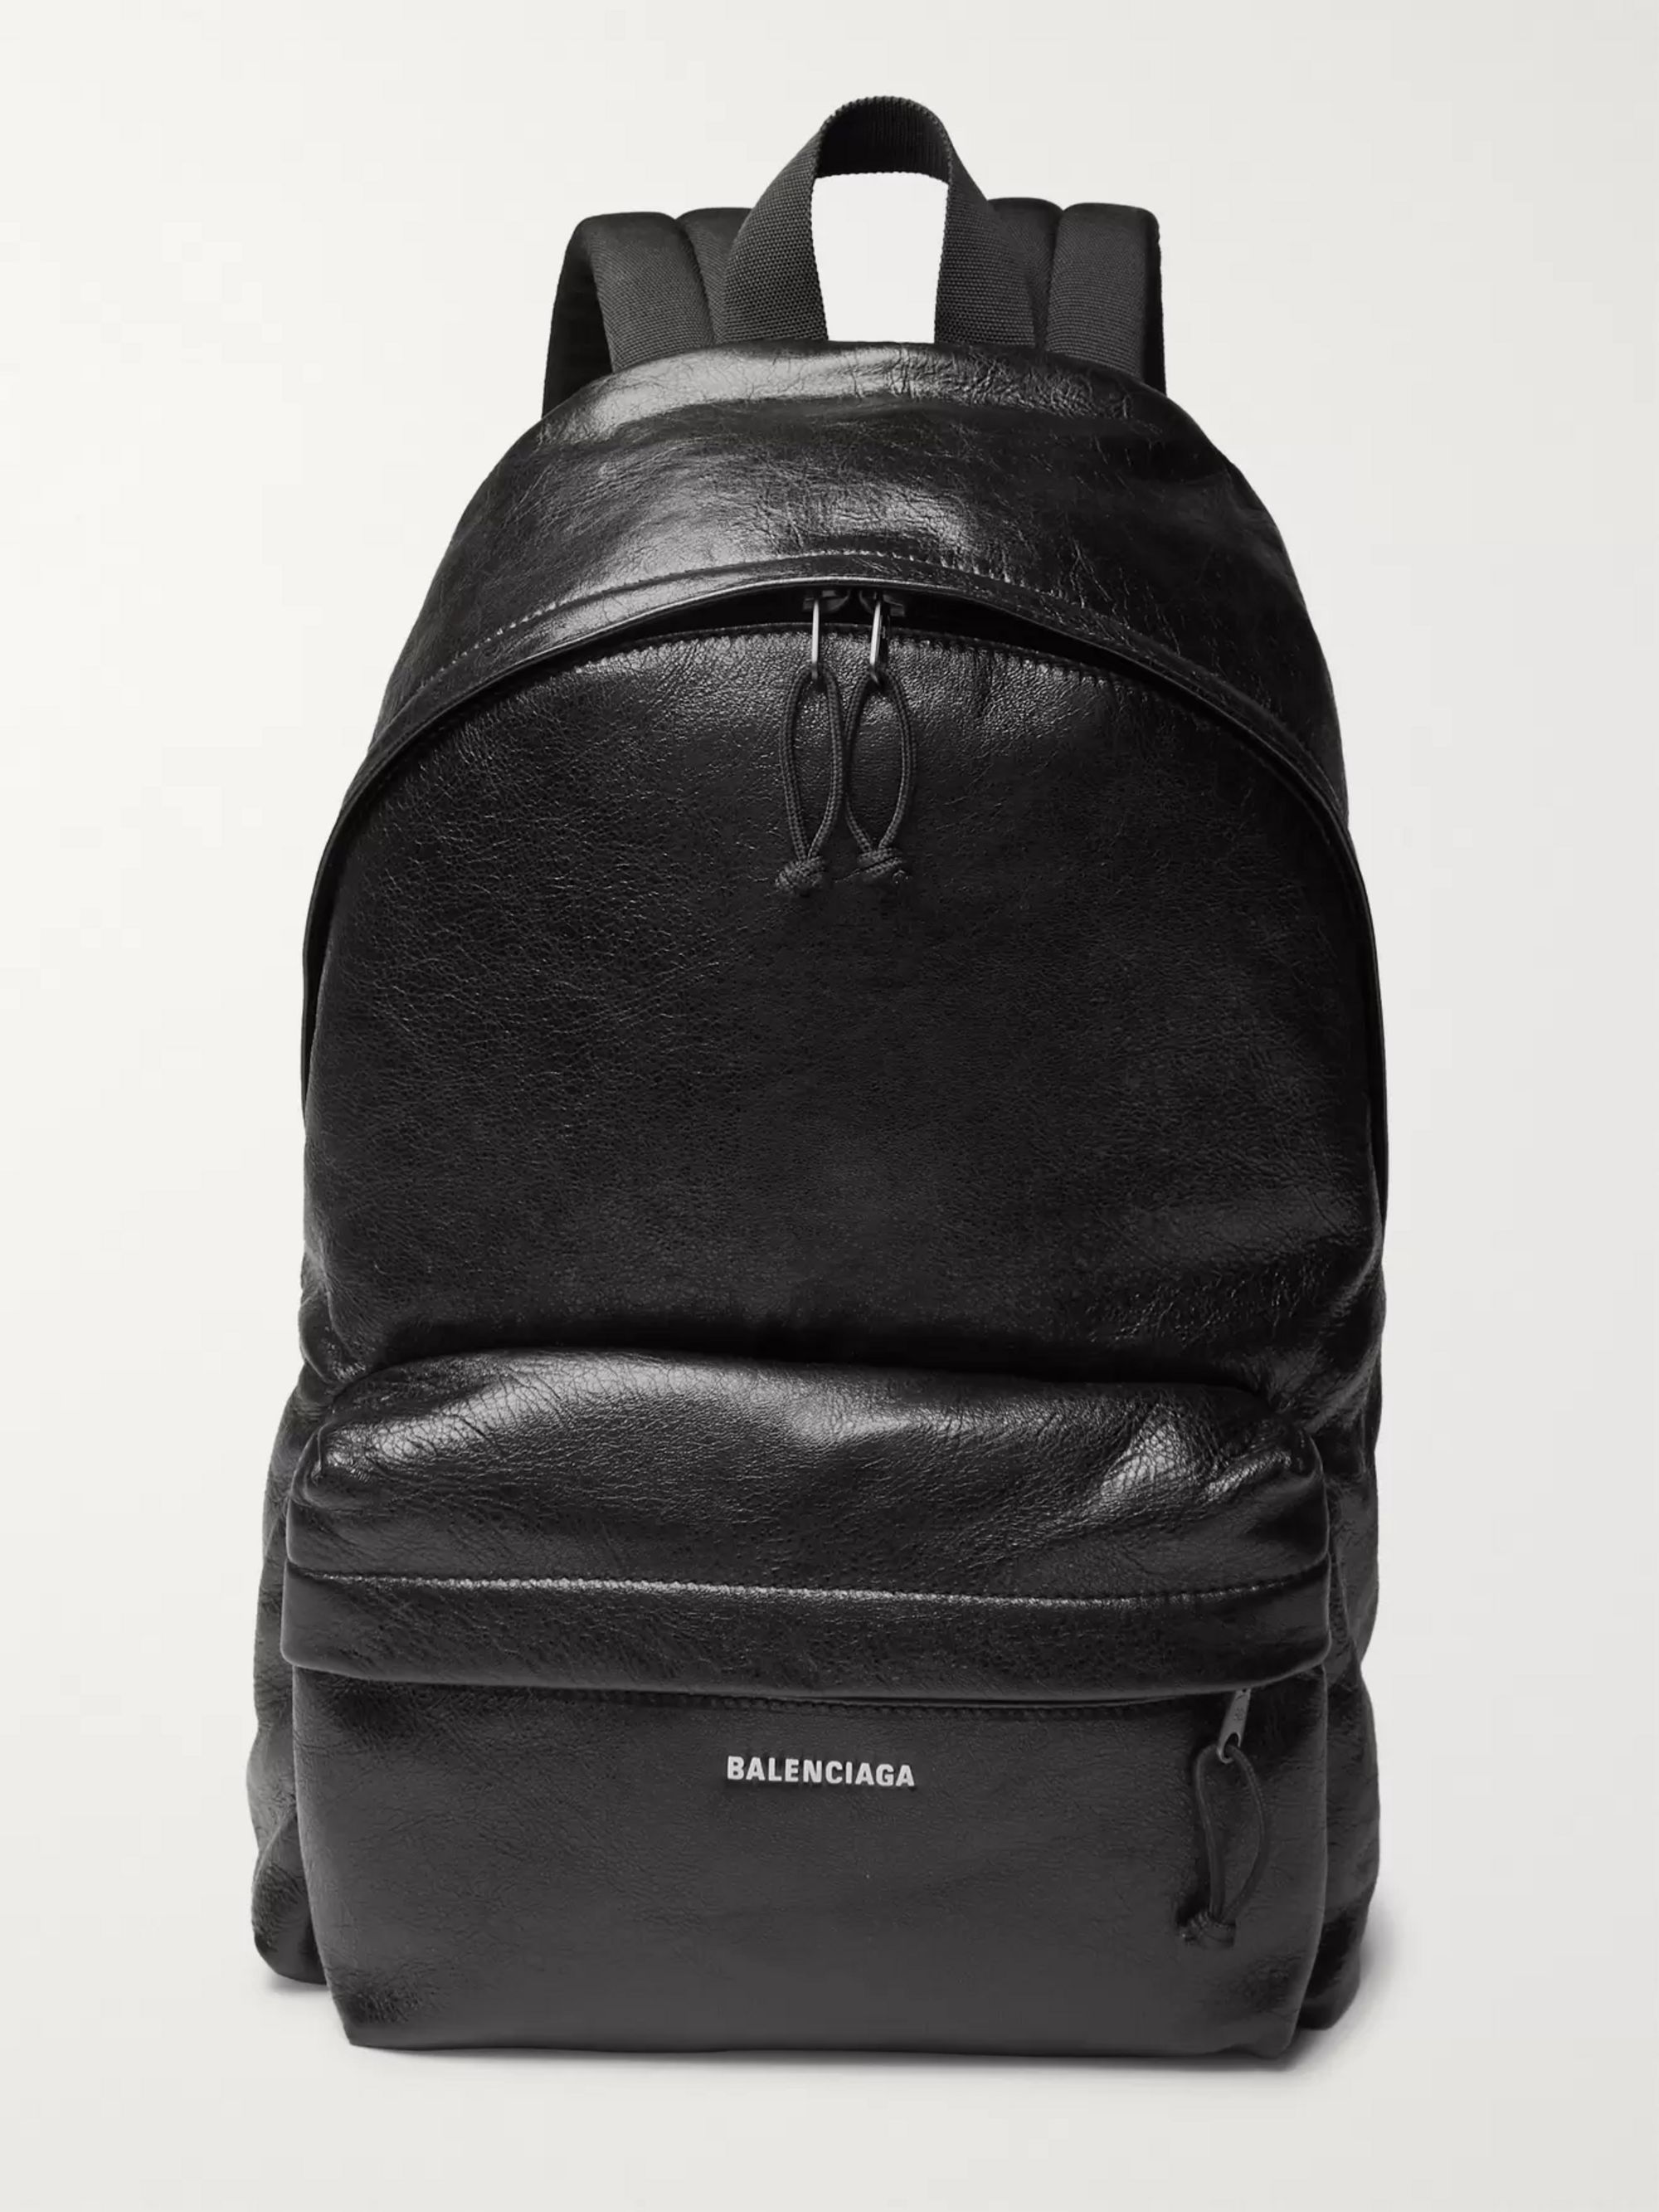 balenciaga black backpack